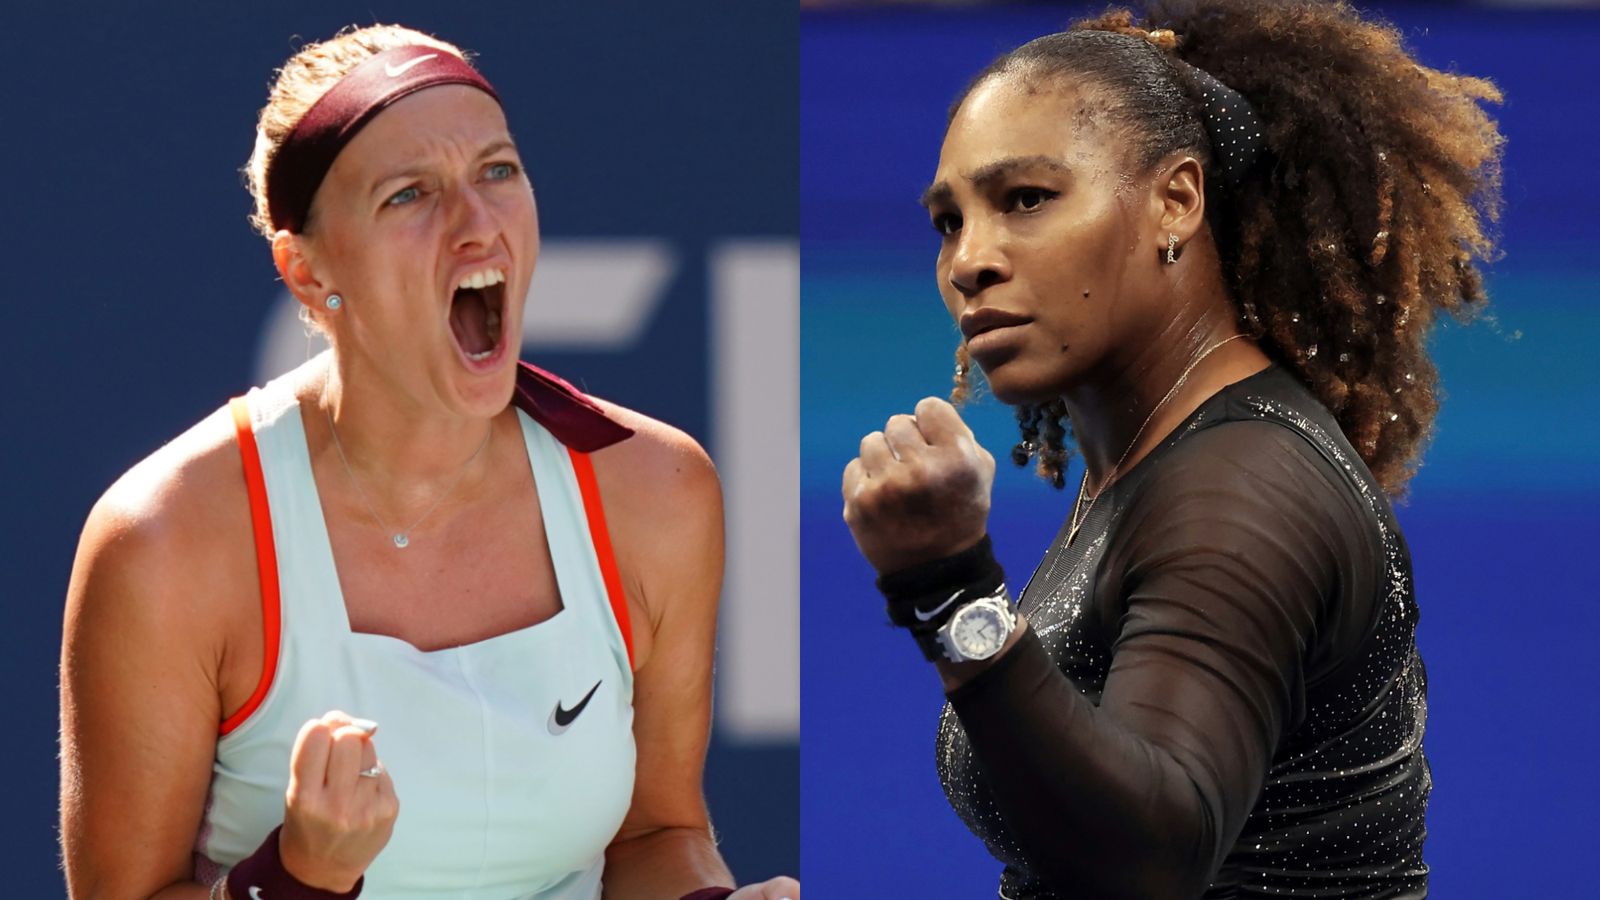 US Open: Petra Kvitova inspired by Serena Williams after saving match points to defeat Garbine Muguruza